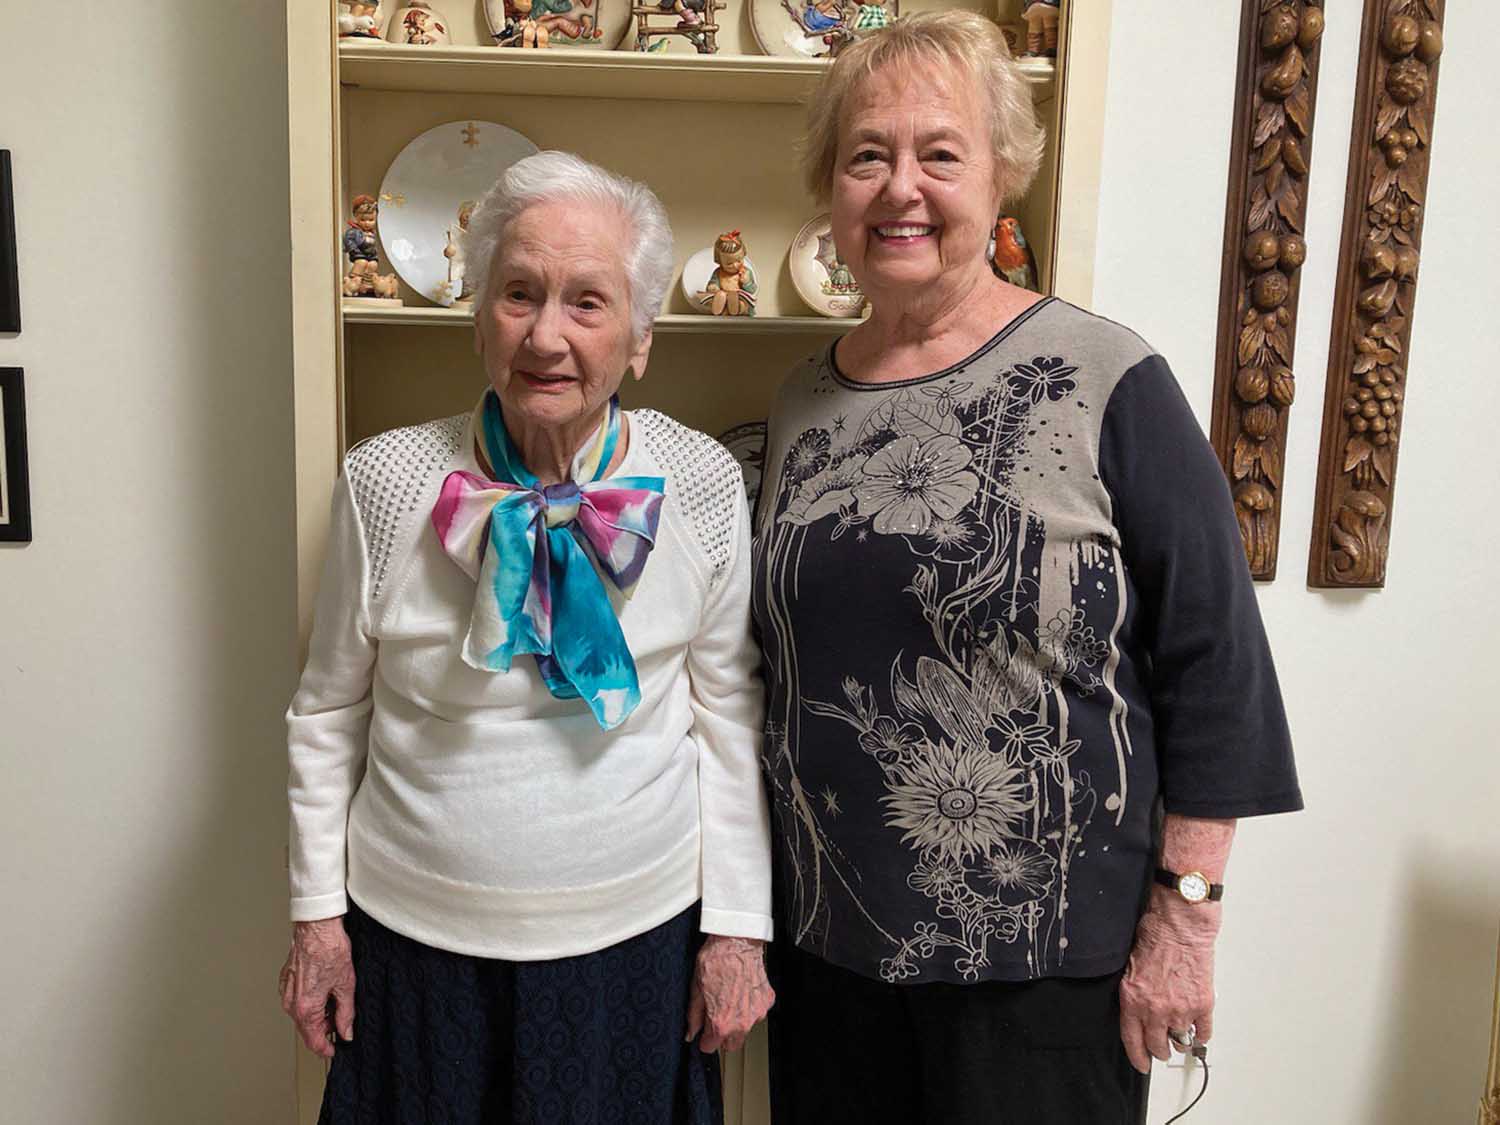 Volunteers needed to help homebound seniors